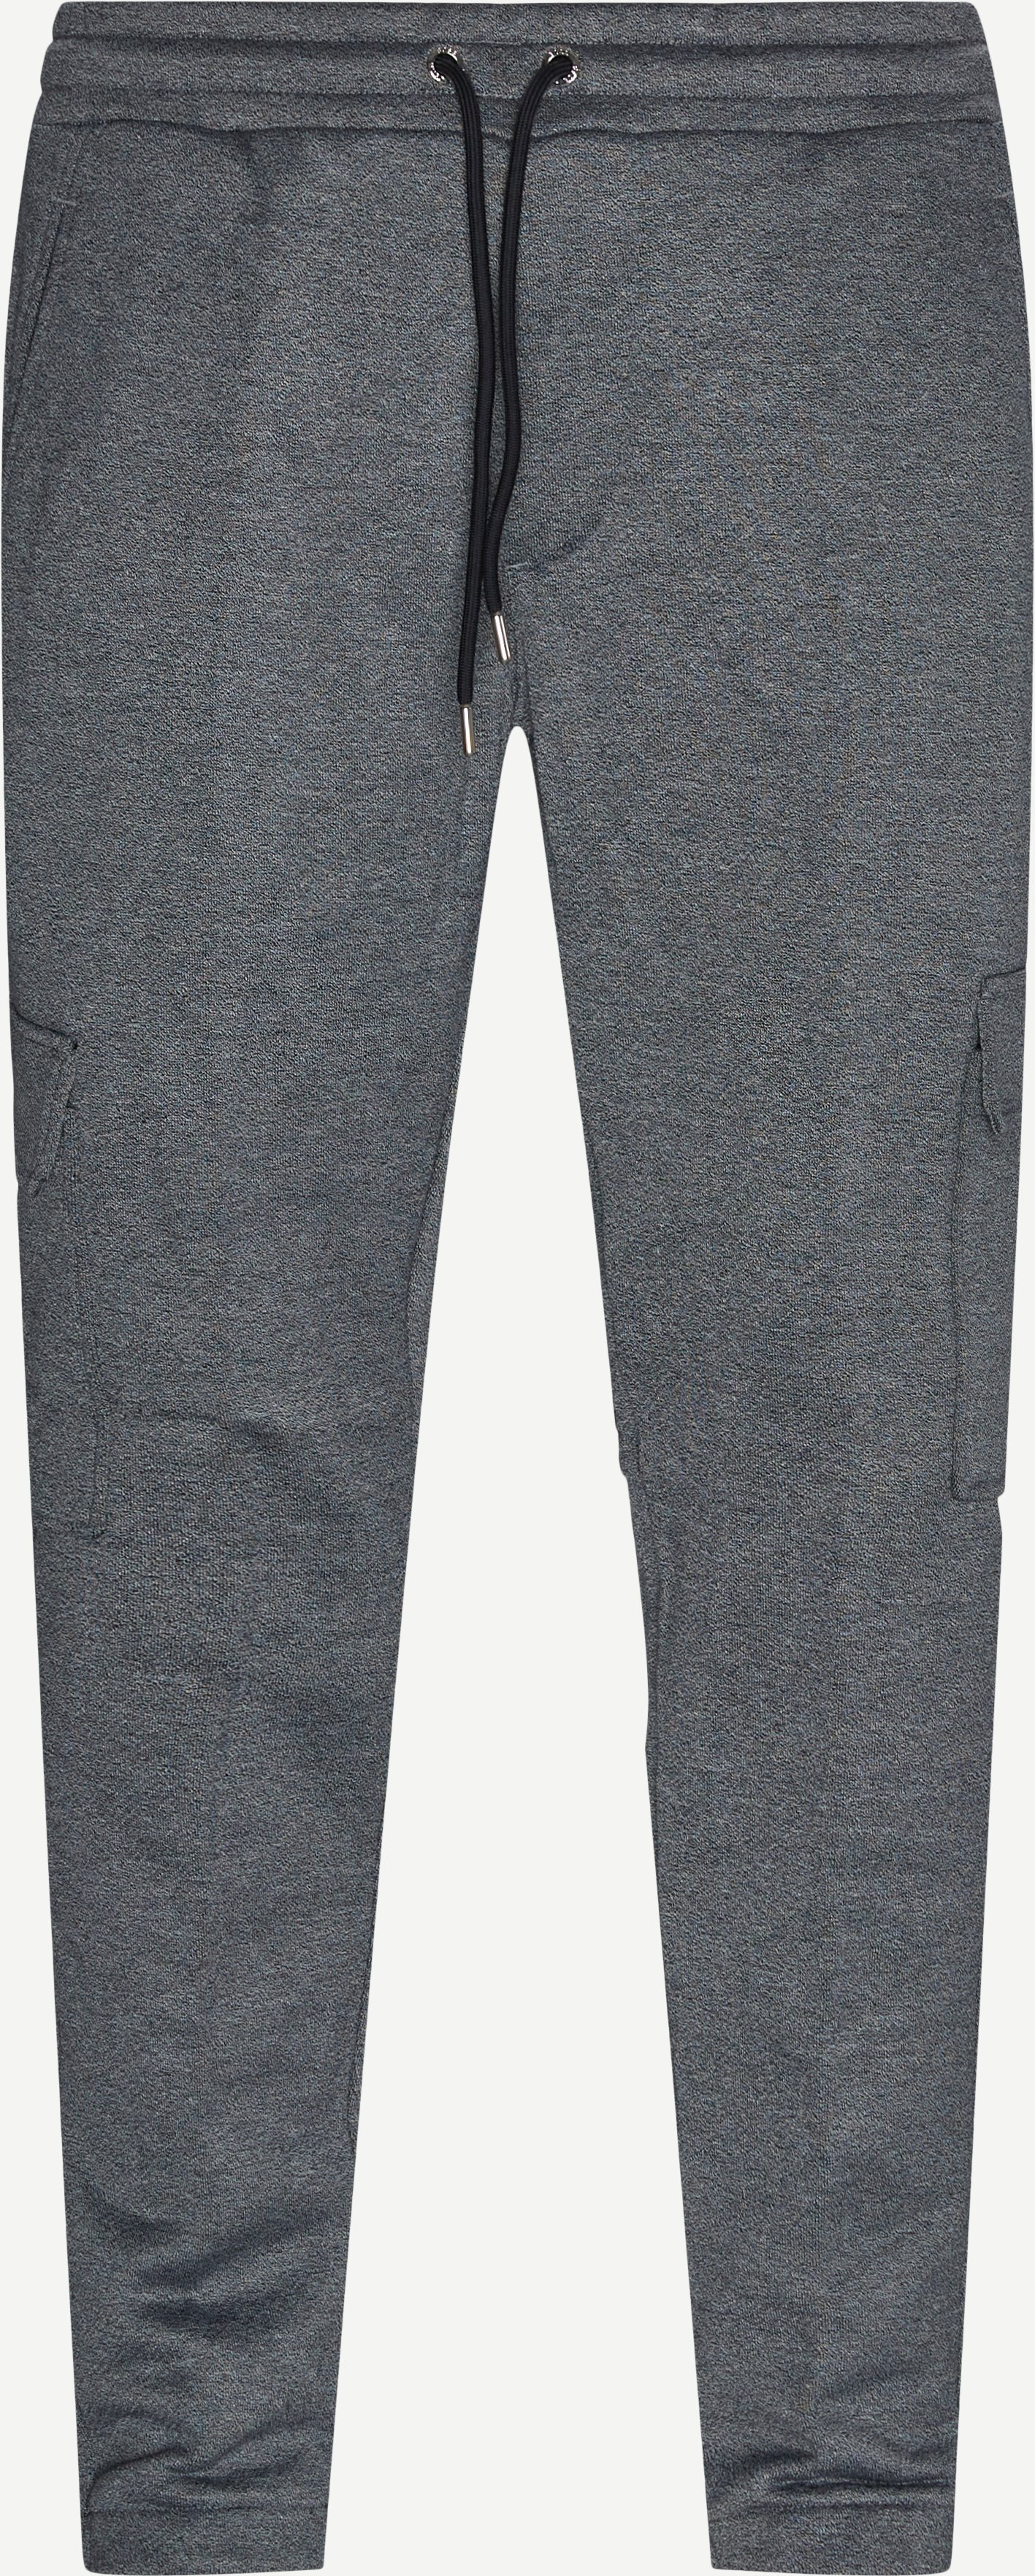 Lamonte 77 Cargo Sweatpants - Trousers - Regular fit - Grey